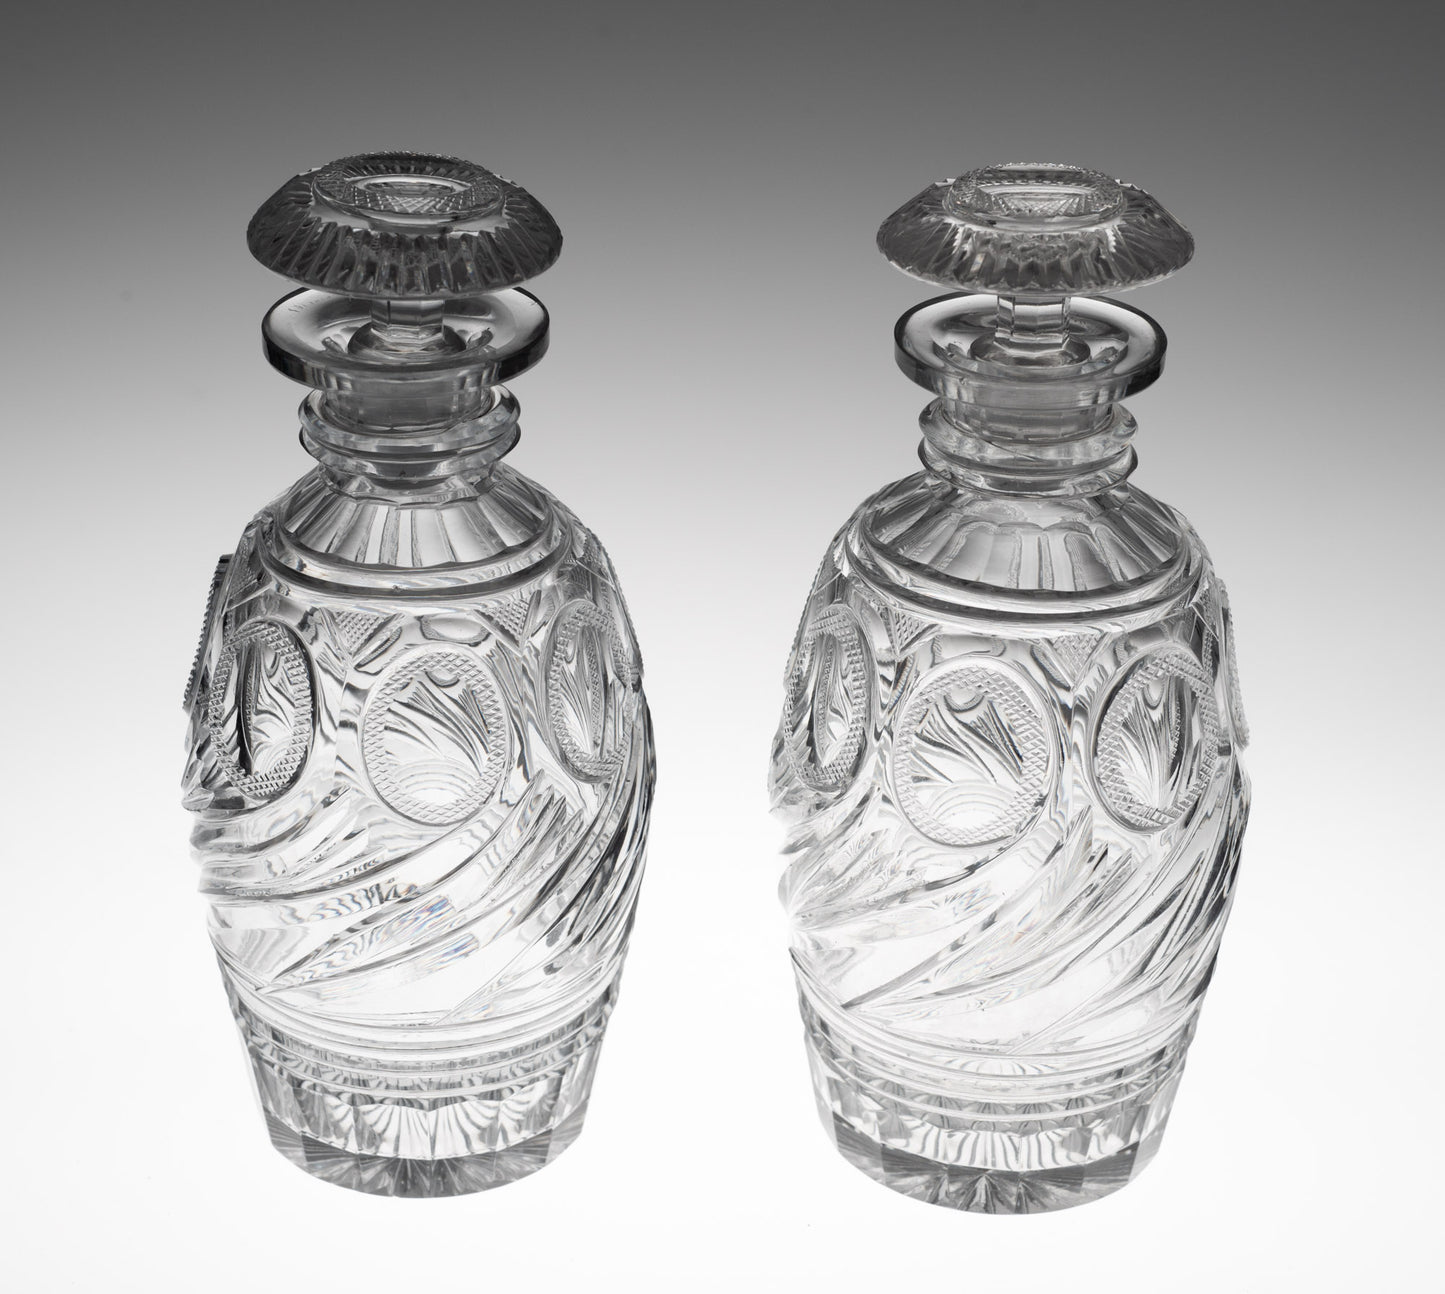 Pair Antique Georgian Regency Cut Glass Spirit/Liqueur Decanters c1830 (Code 2836)